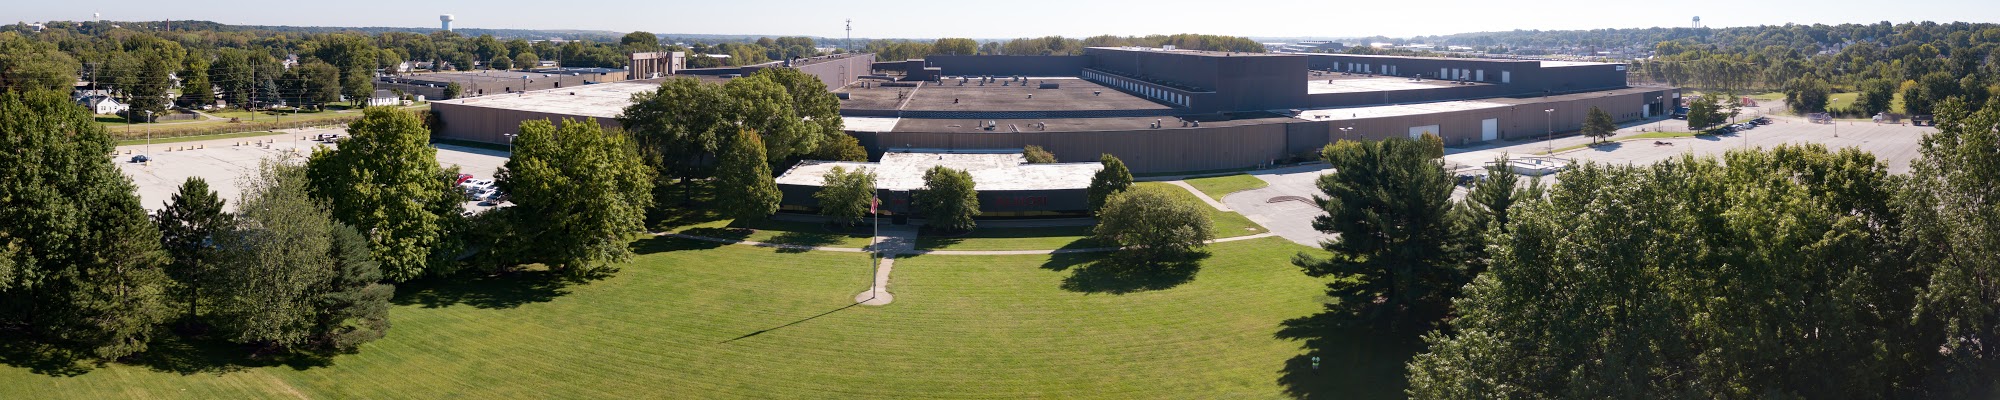 River Bend Industrial Center